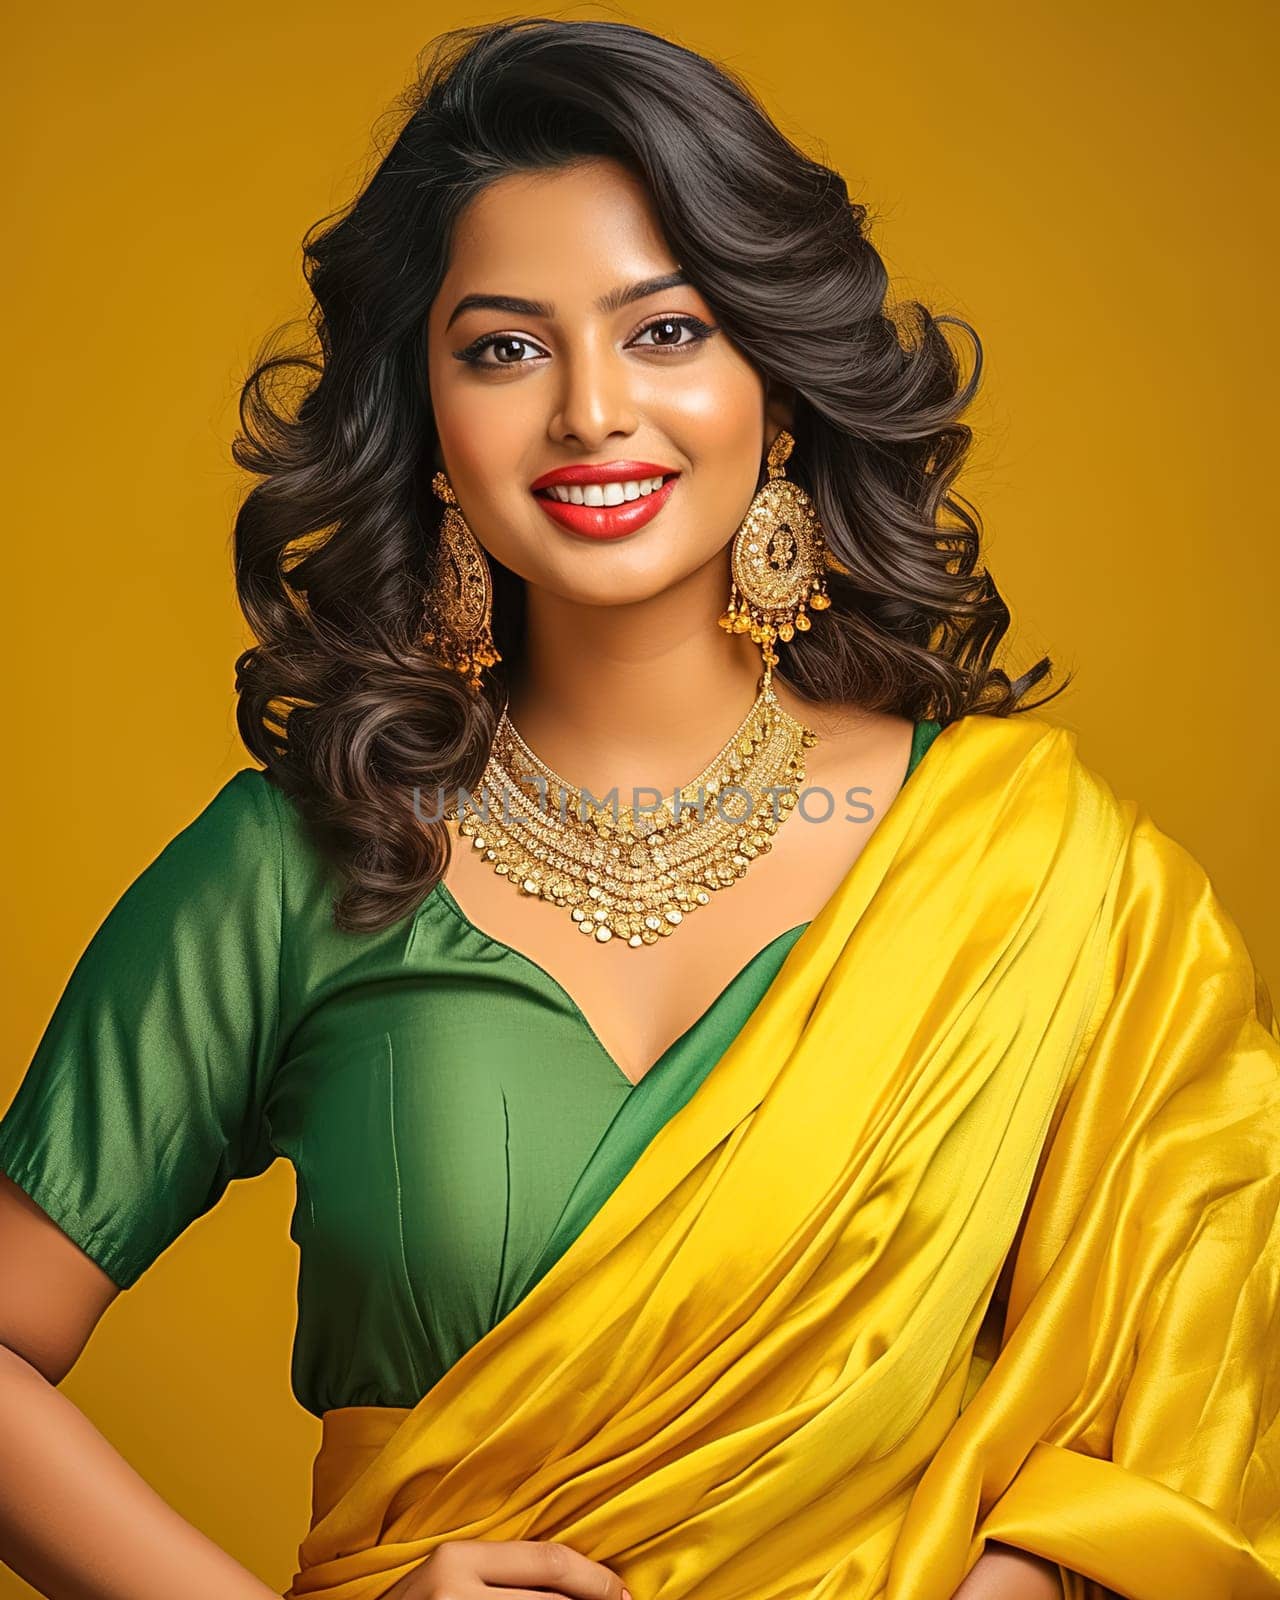 Portrait of Indian woman in green-yellow sari